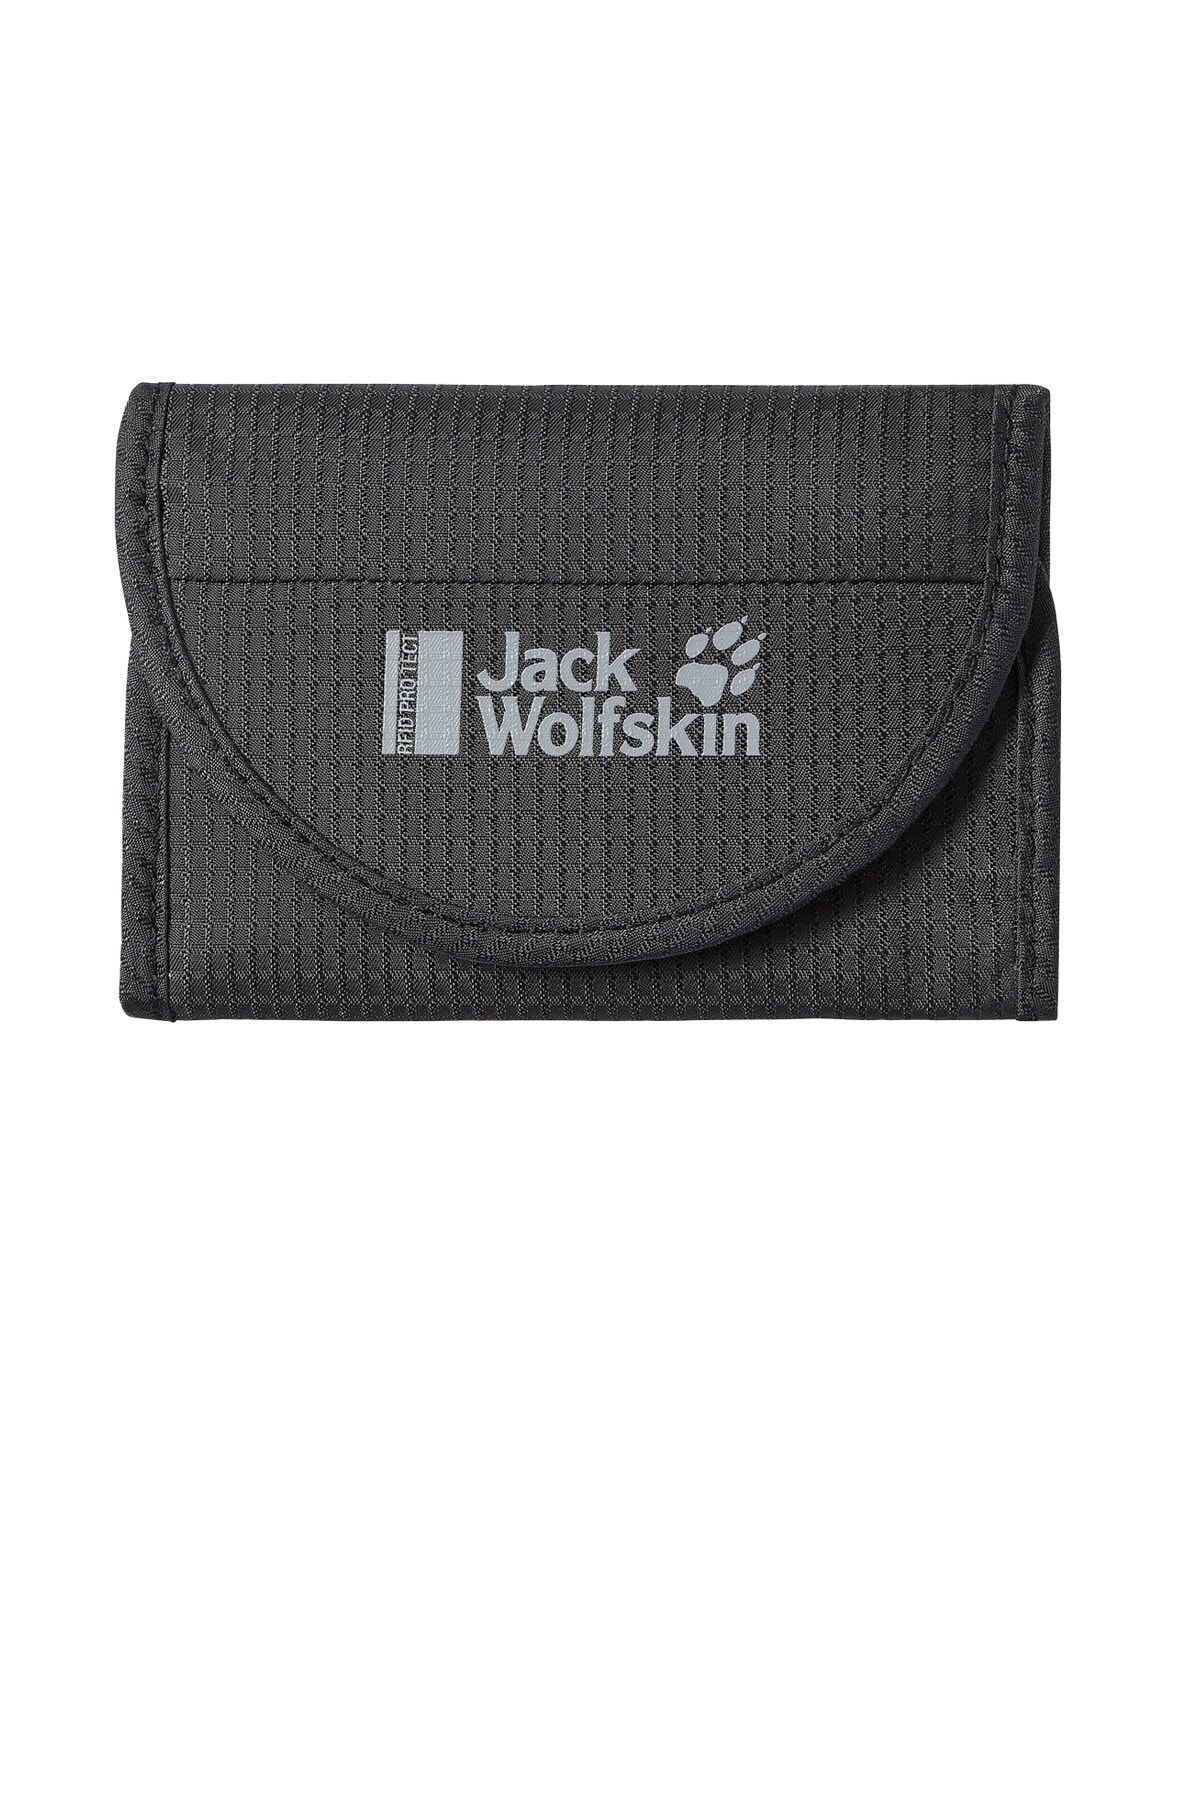 Jack Wolfskin Unisex Cashbag Cüzdan - 8006561-6350